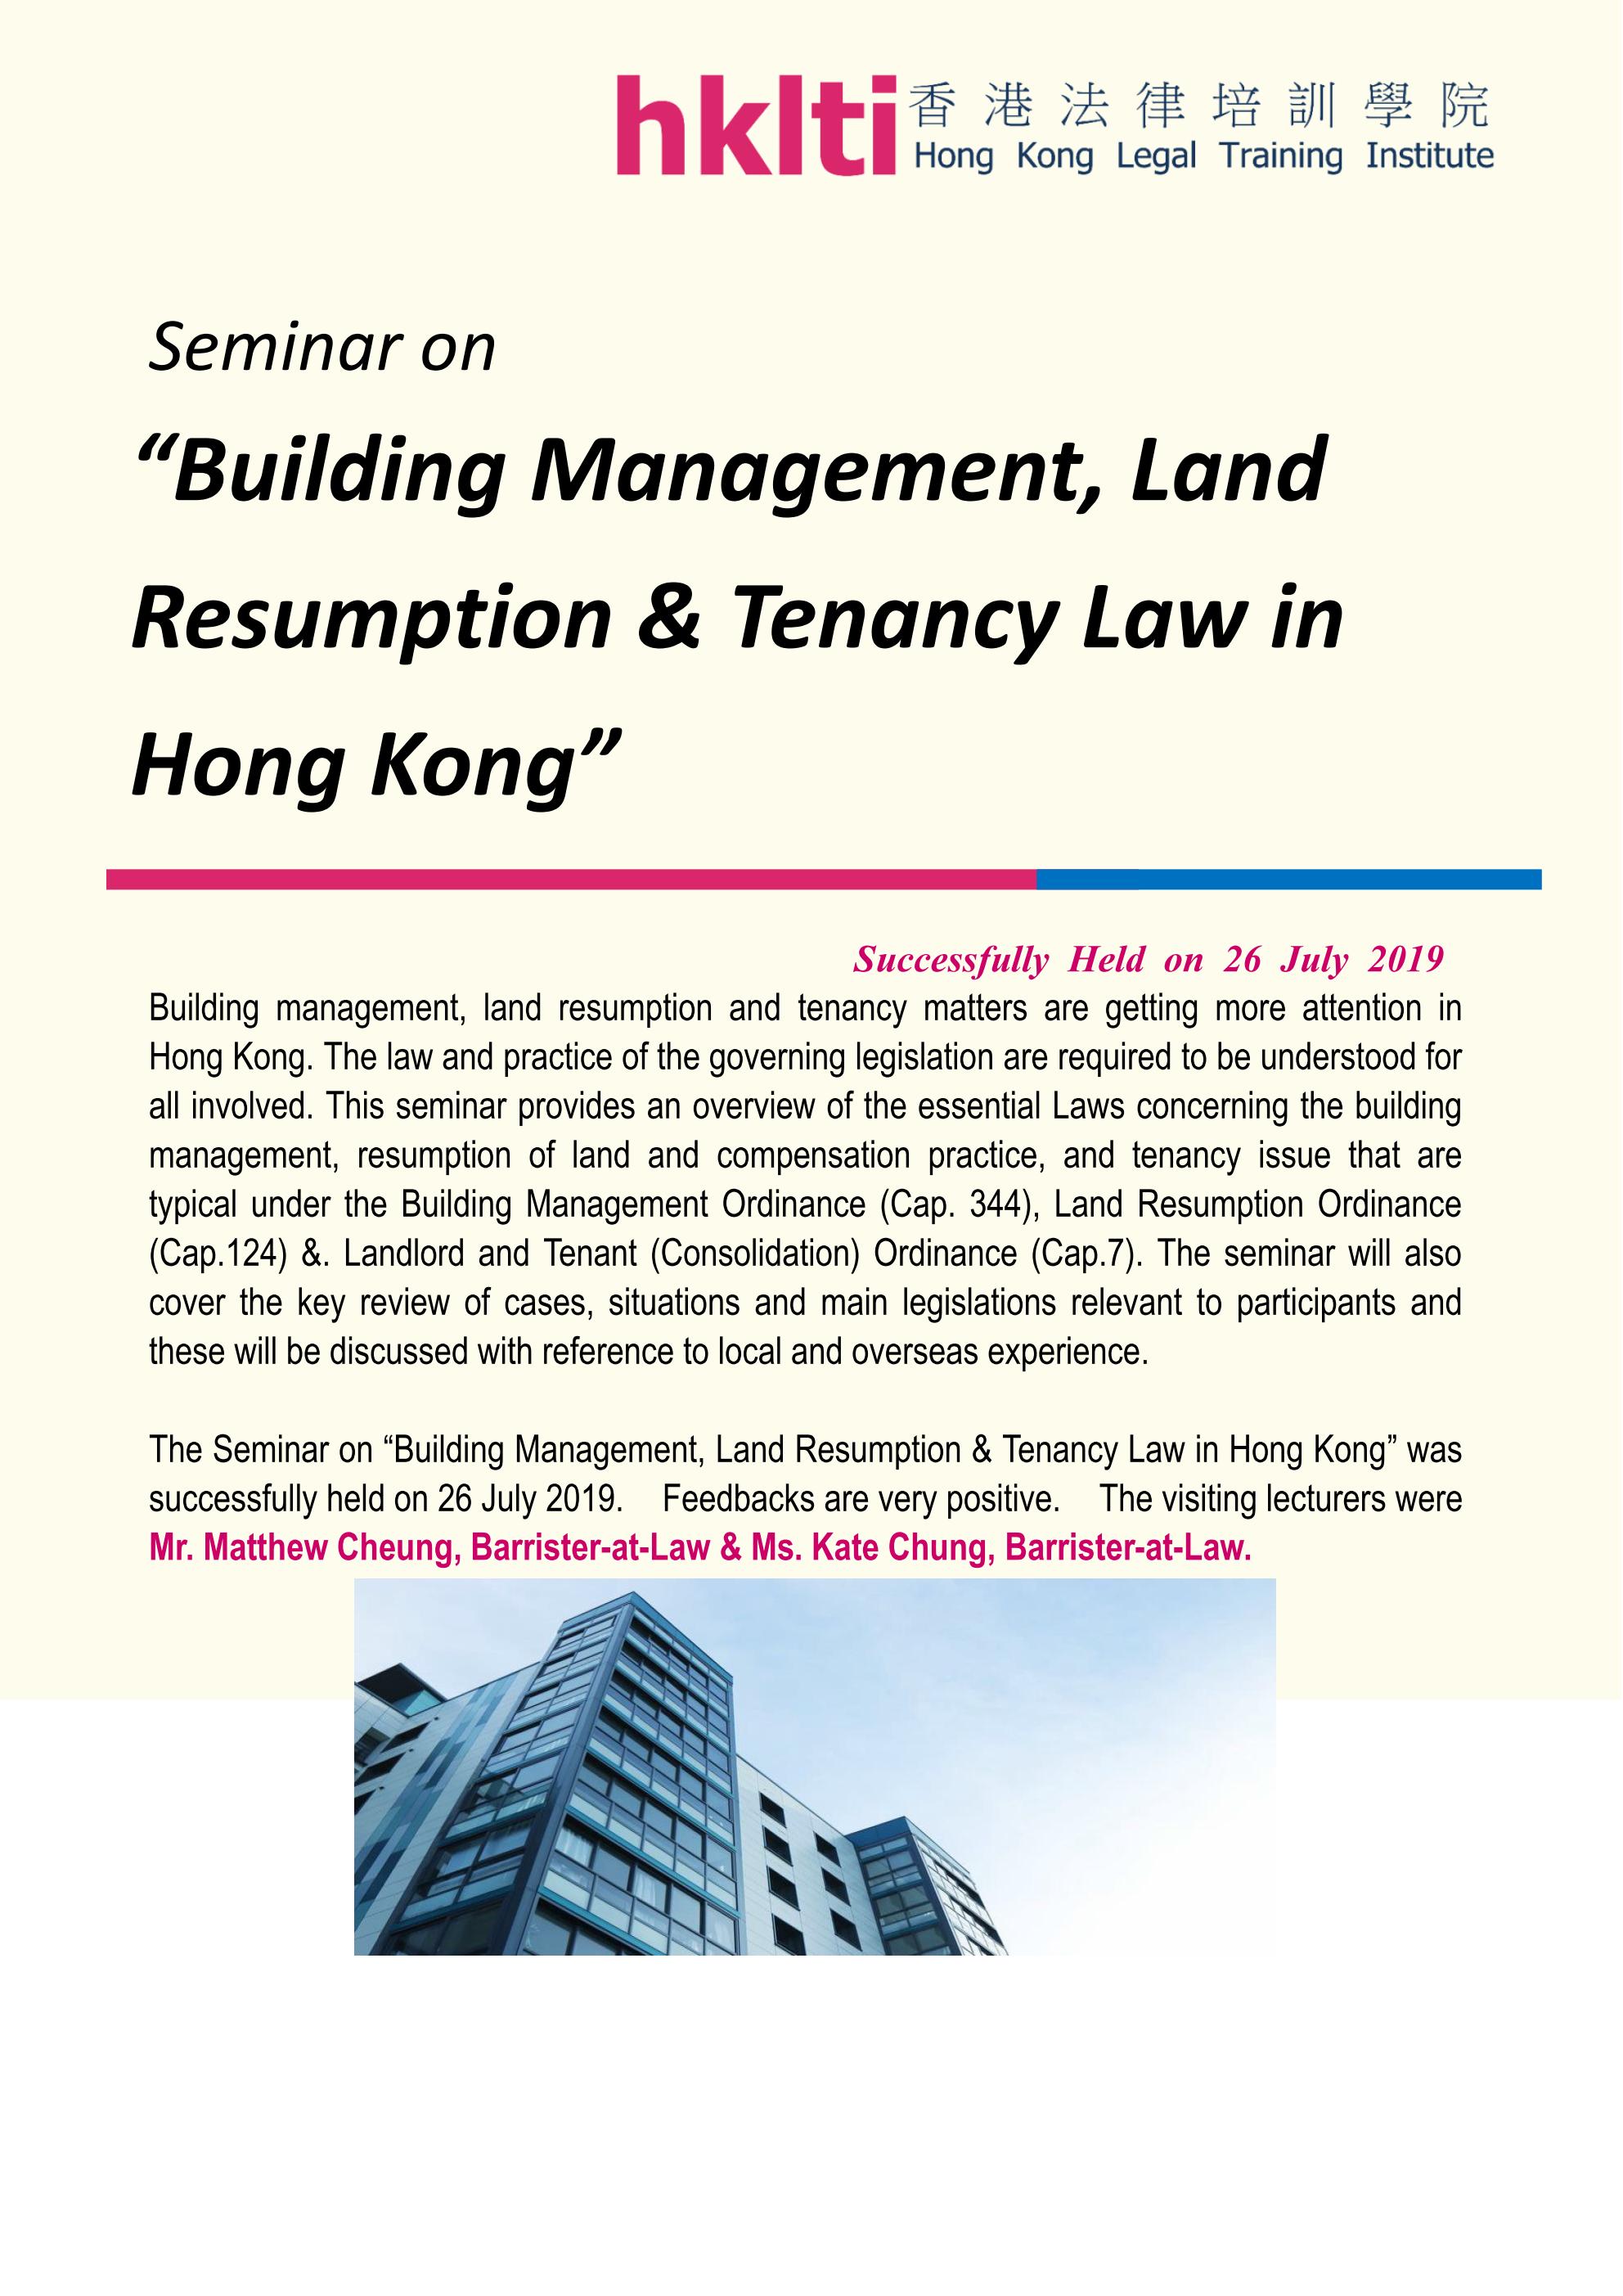 hklti building management land resumption tenancy law in hong kong seminar report 20190726